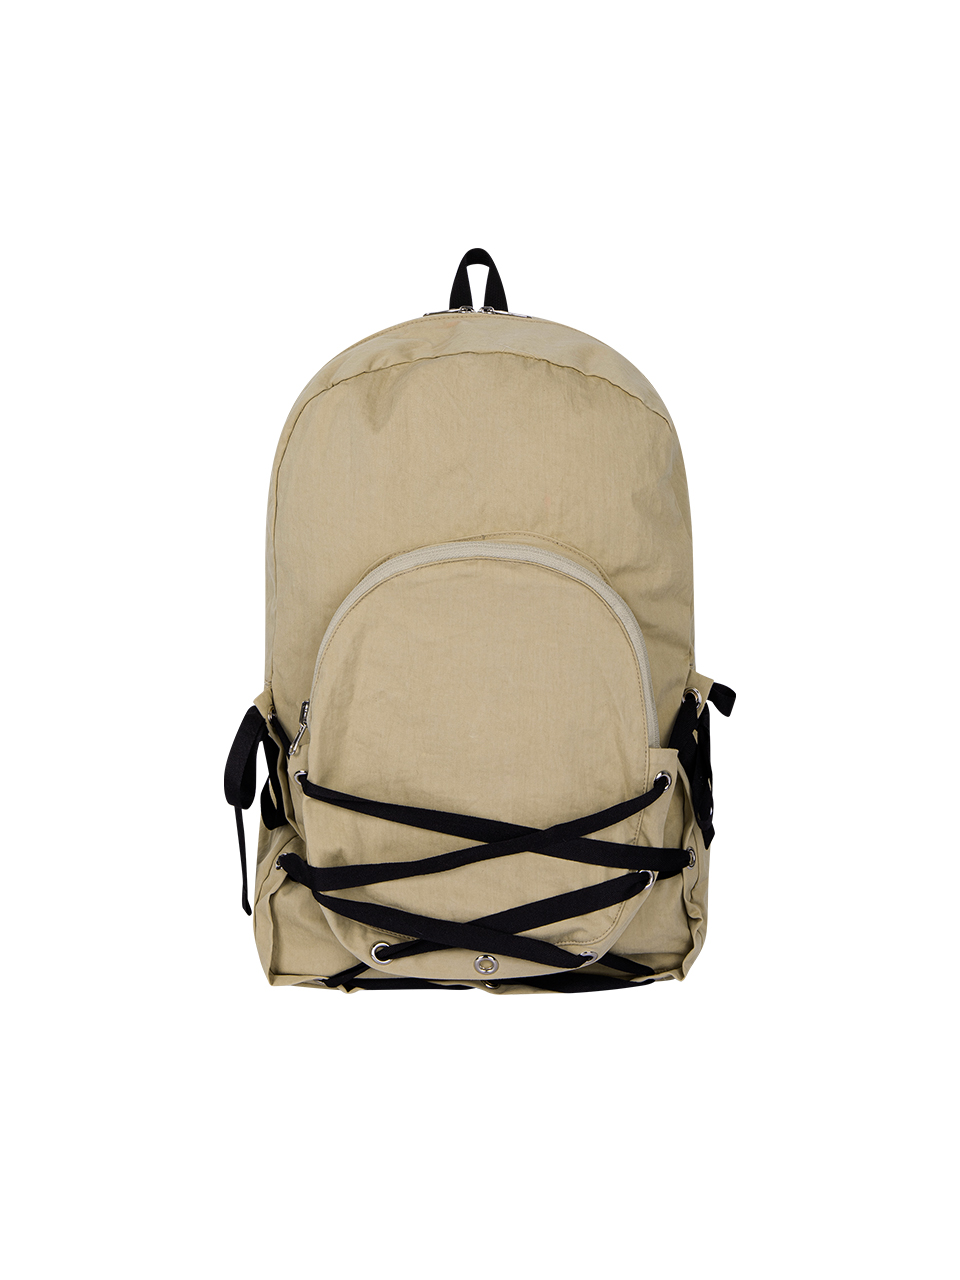 Nest Backpack - Sand Beige